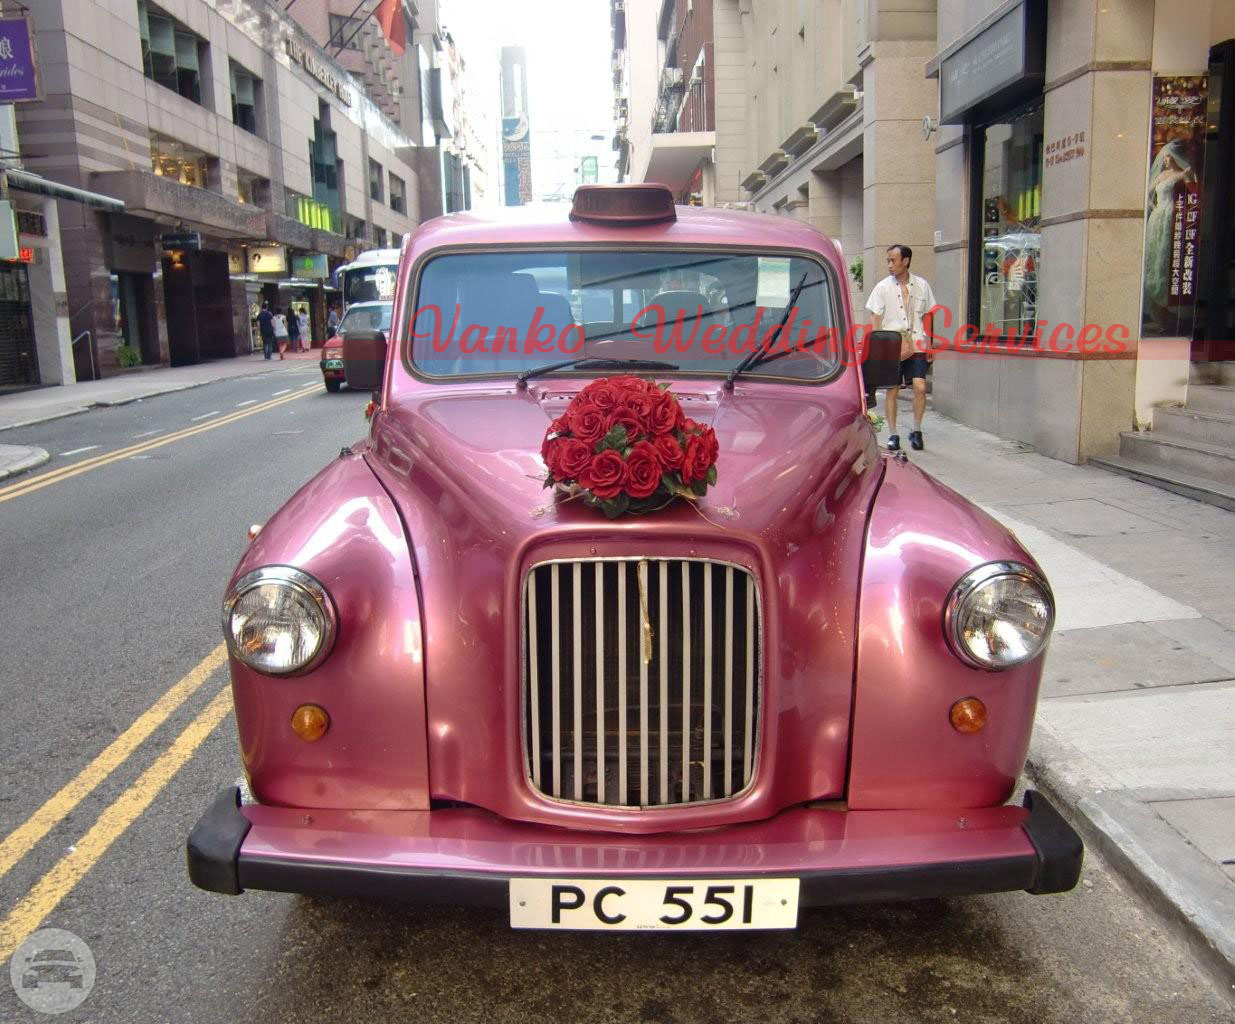 London Taxi - Light Pink
Sedan /
Kowloon, Hong Kong

 / Hourly HKD 0.00
